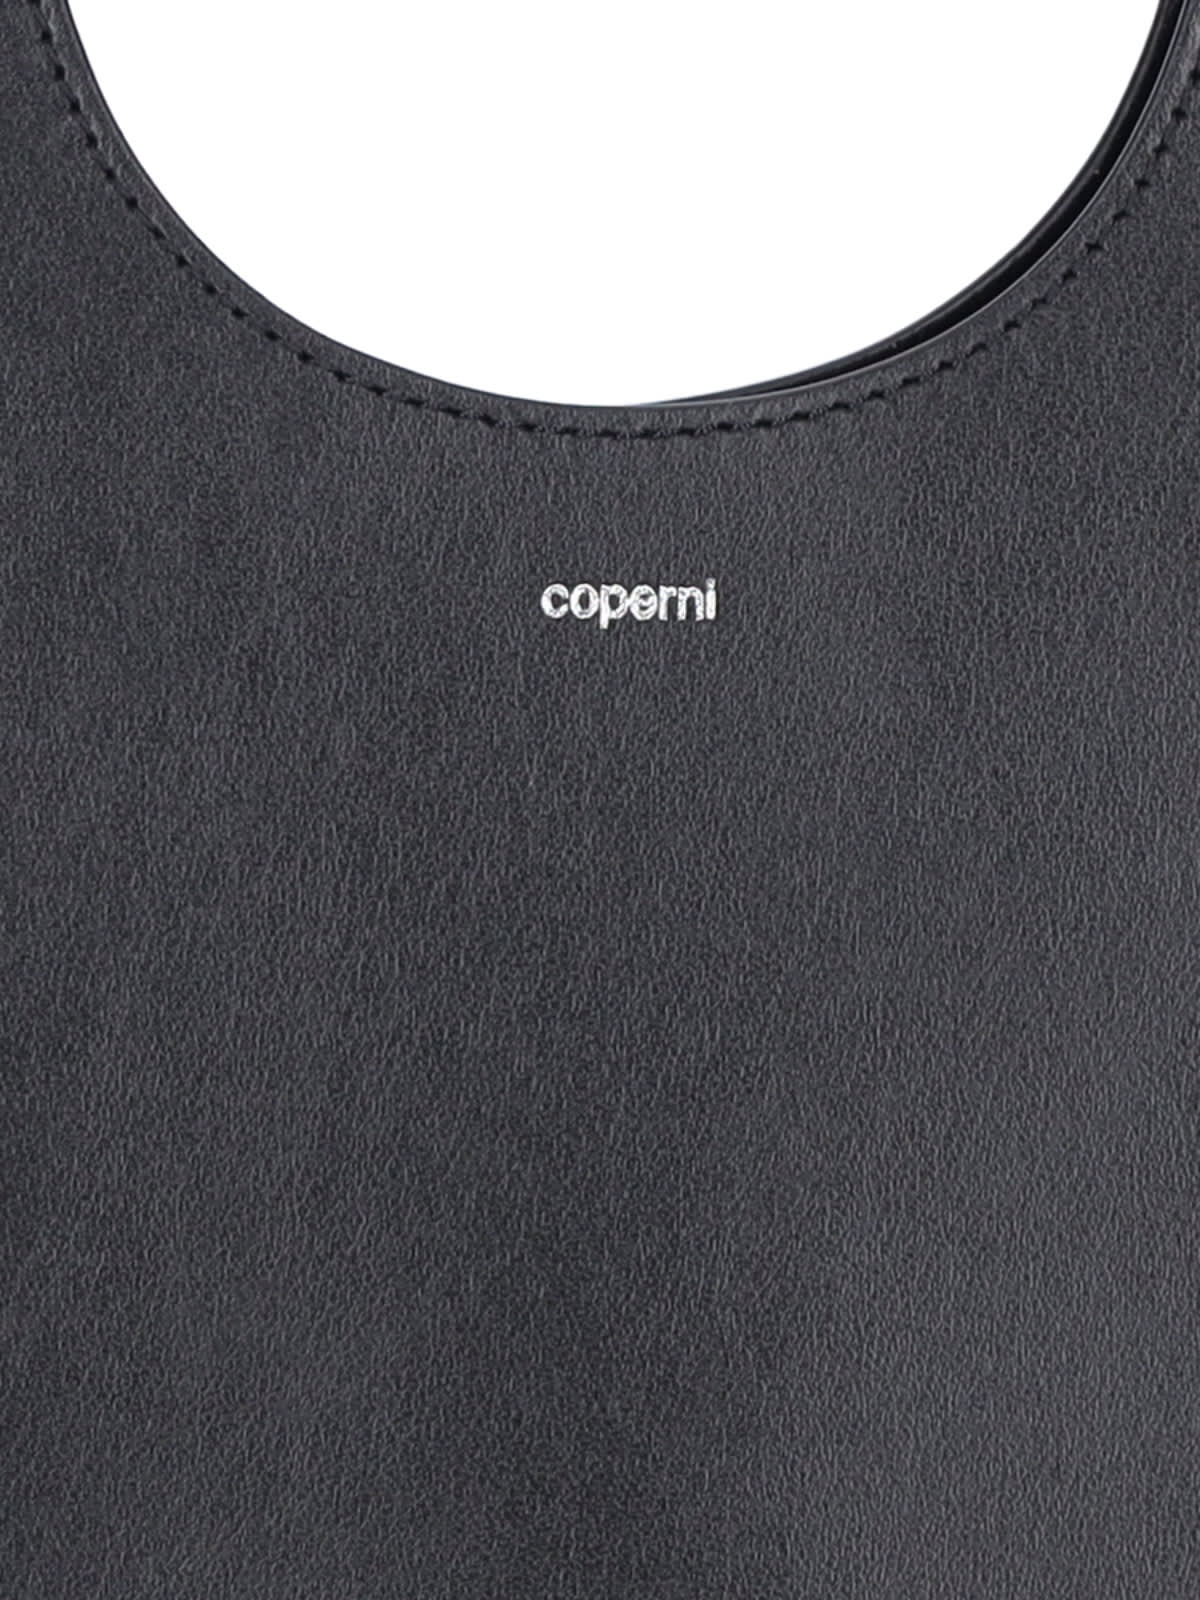 Shop Coperni Micro Bag Swipe In Black